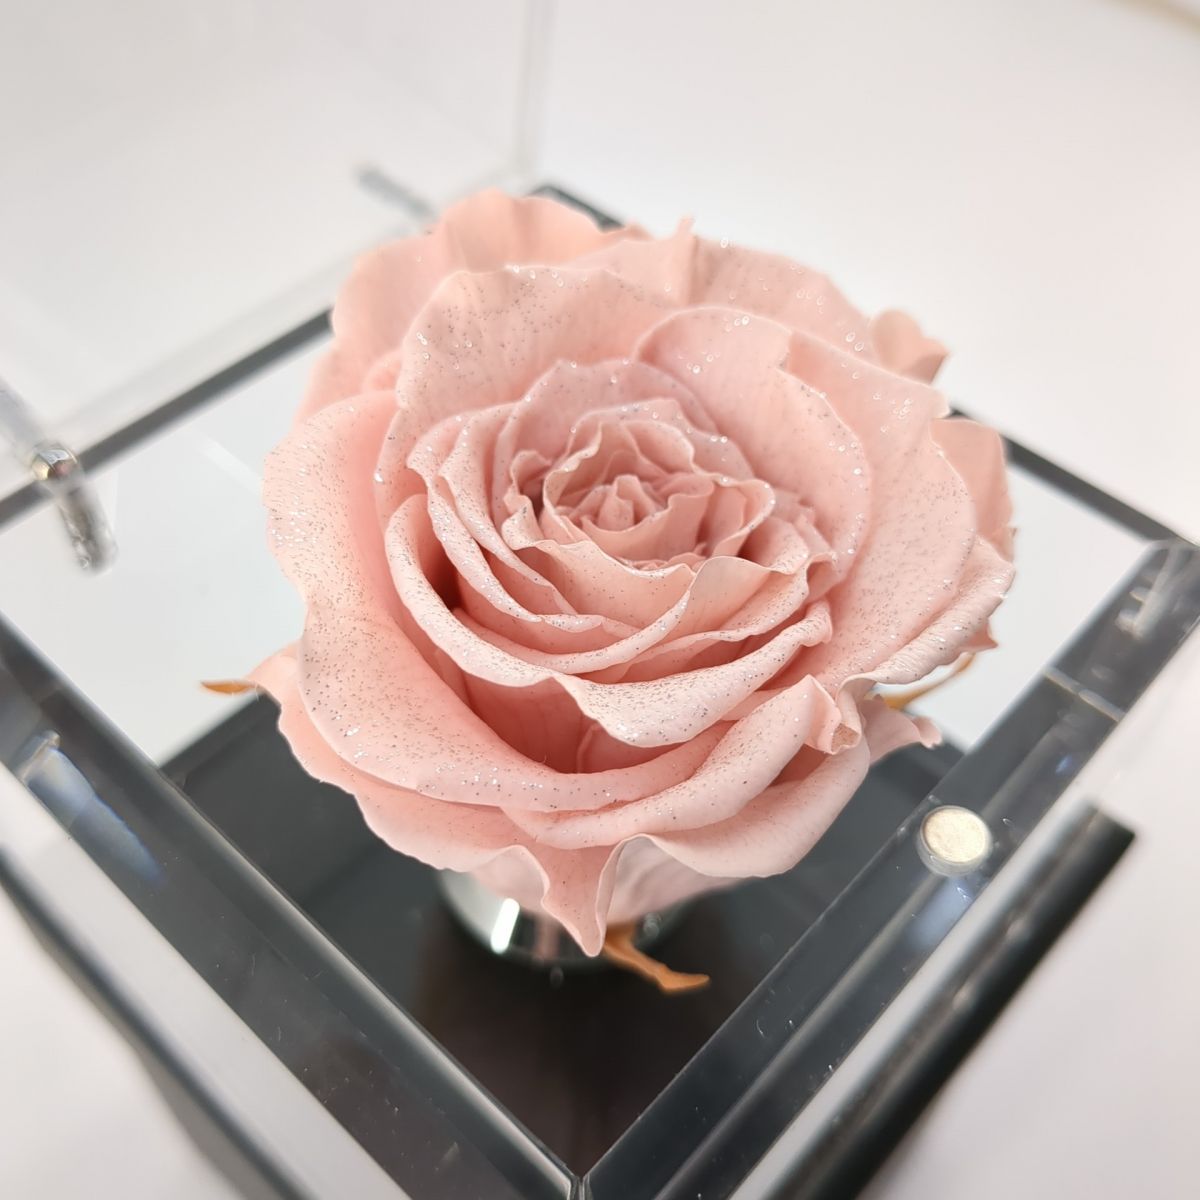 ROSE GALLERYmyuze diamond rose box (M) pink preserved rose interior *3109/. bamboo shop 